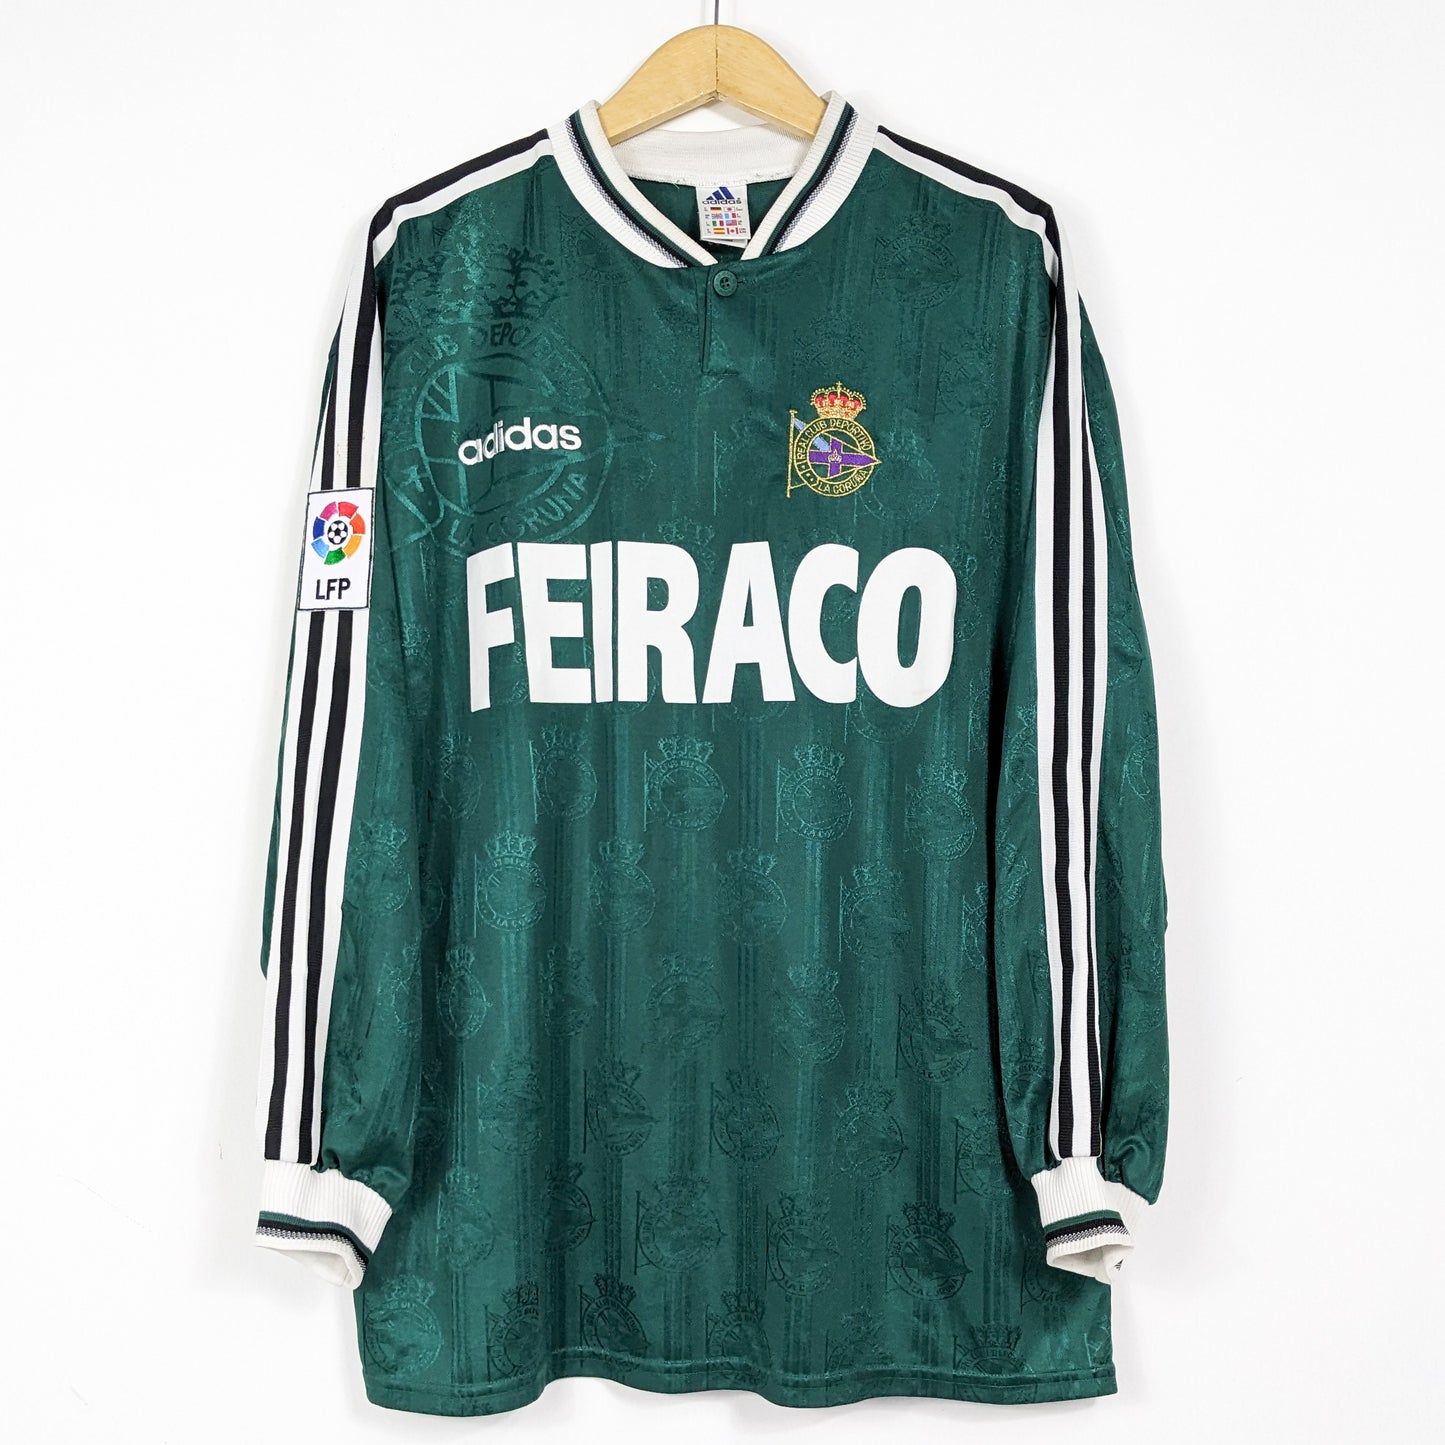 Authentic Deportivo La Coruna 1998/1999 Away - Mauro Silva #6 Size XL (Long Sleeve)